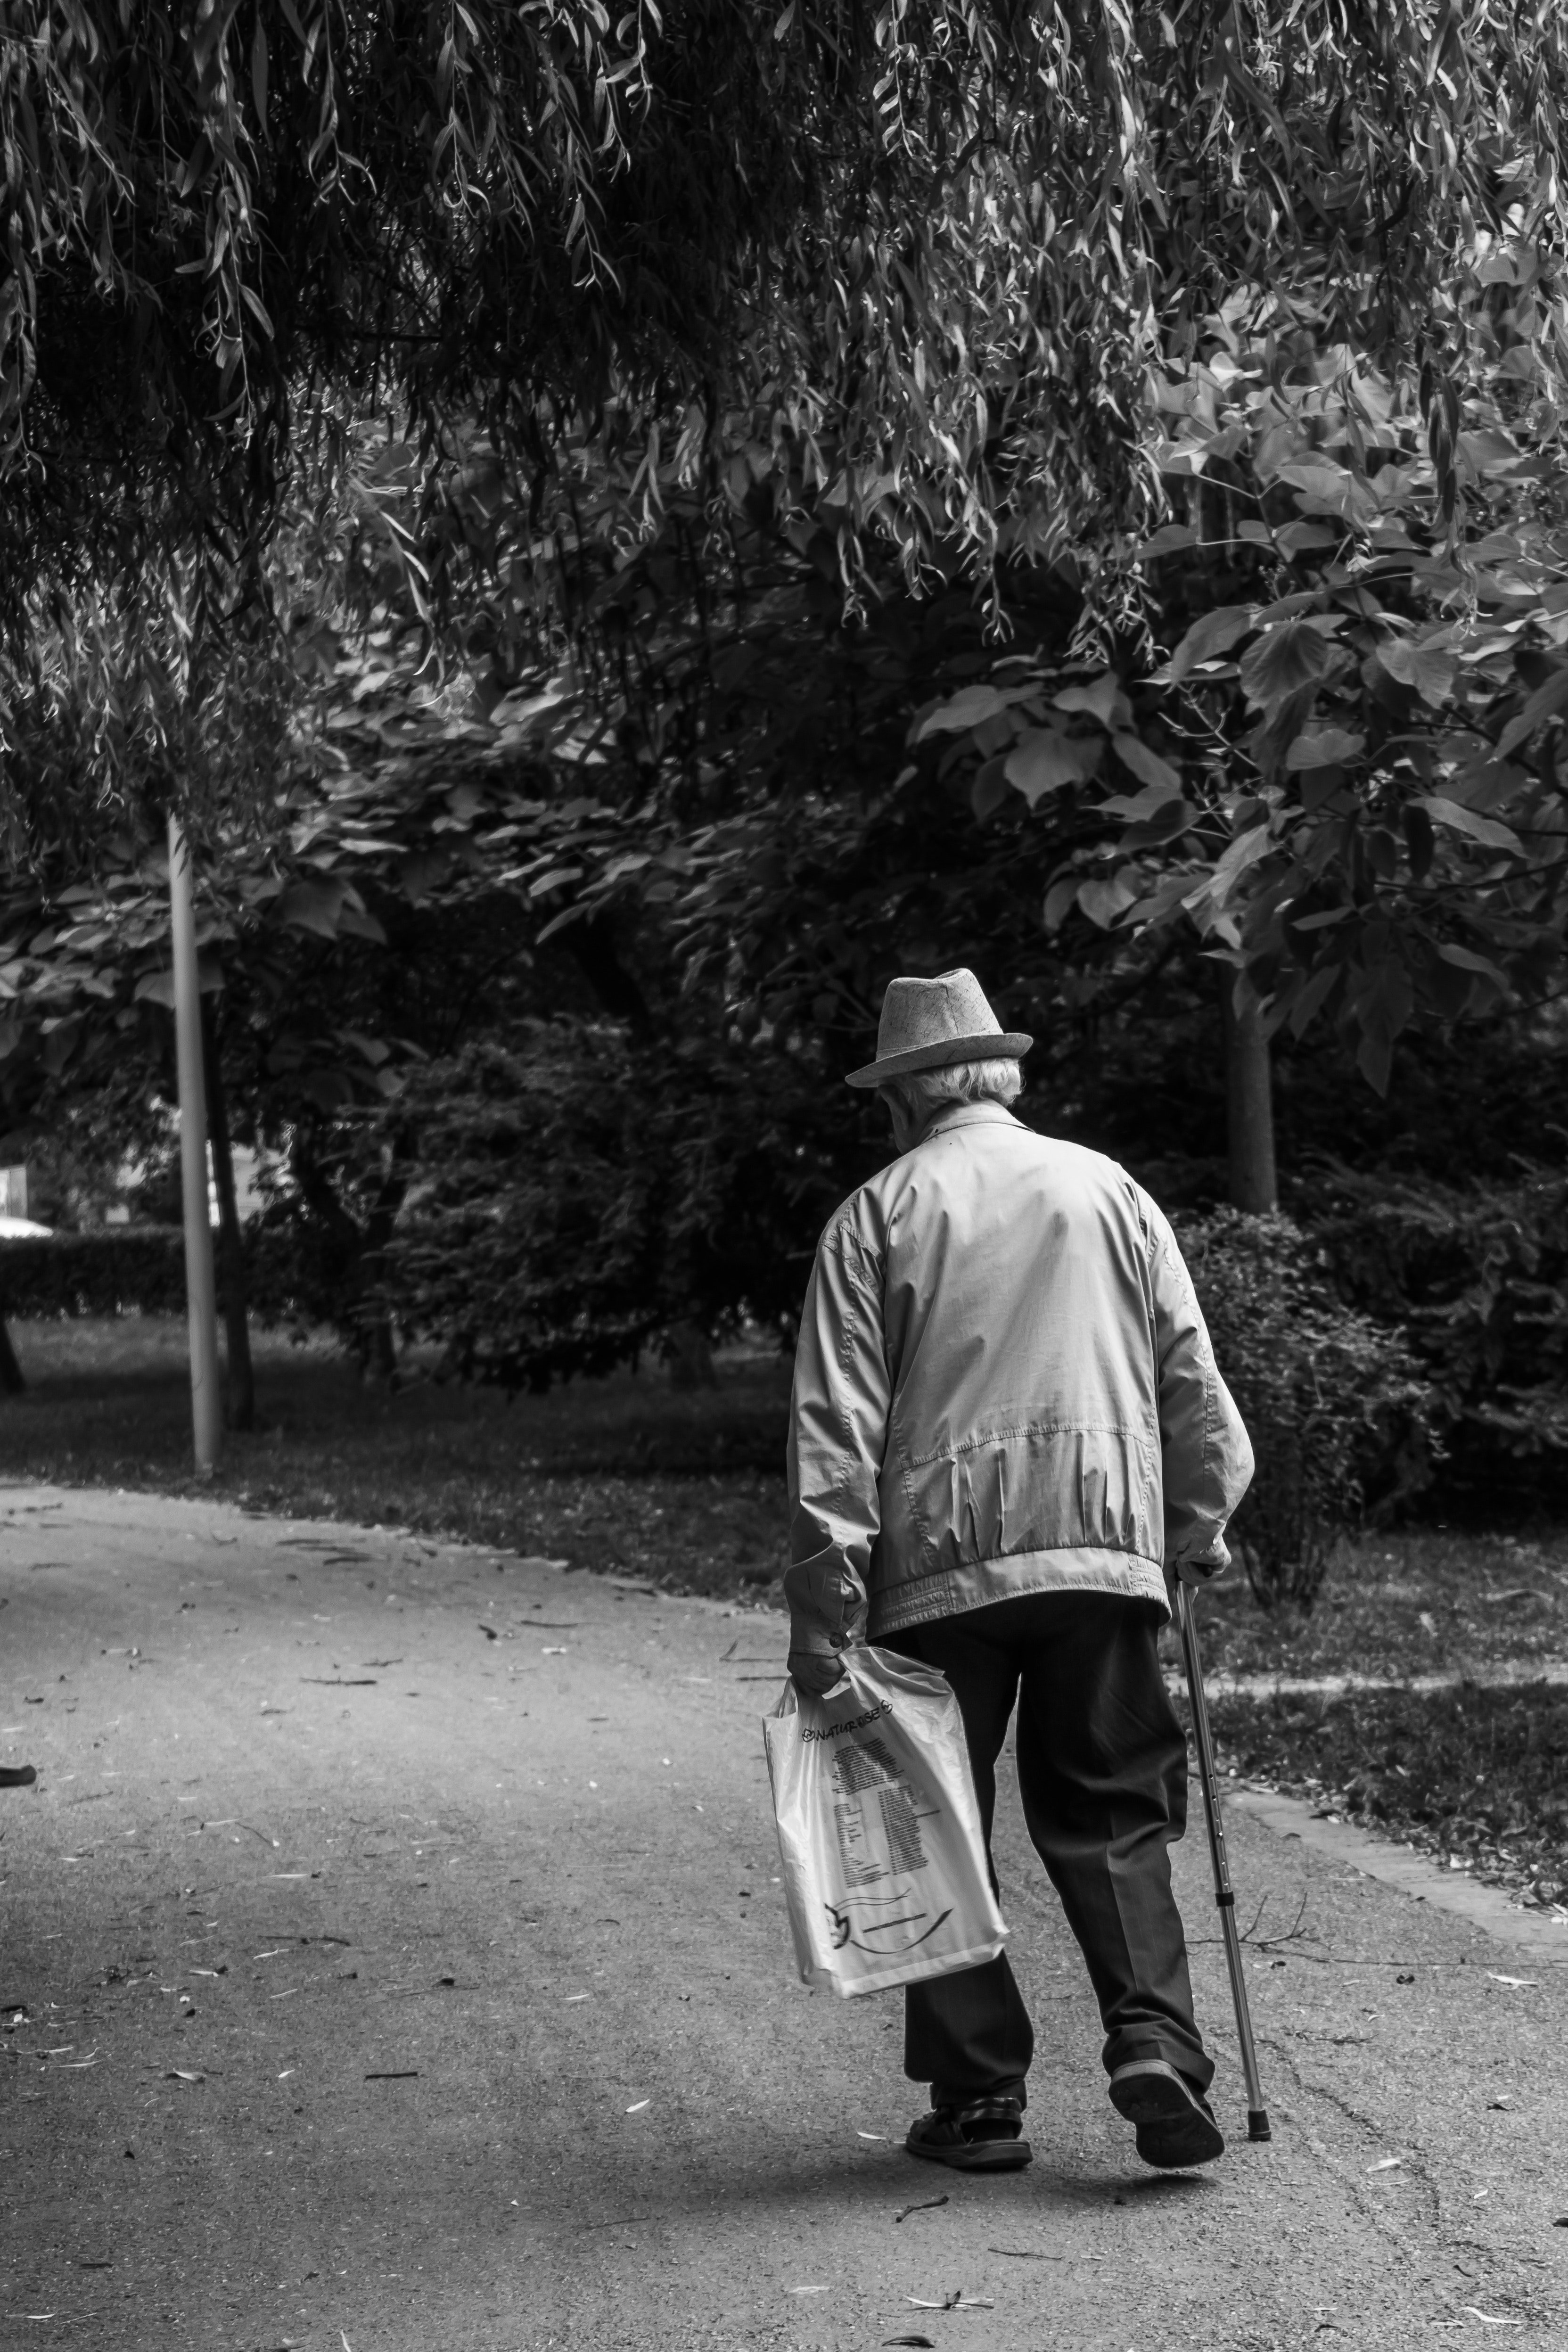 An old man walking alone | Source: Pexels.com